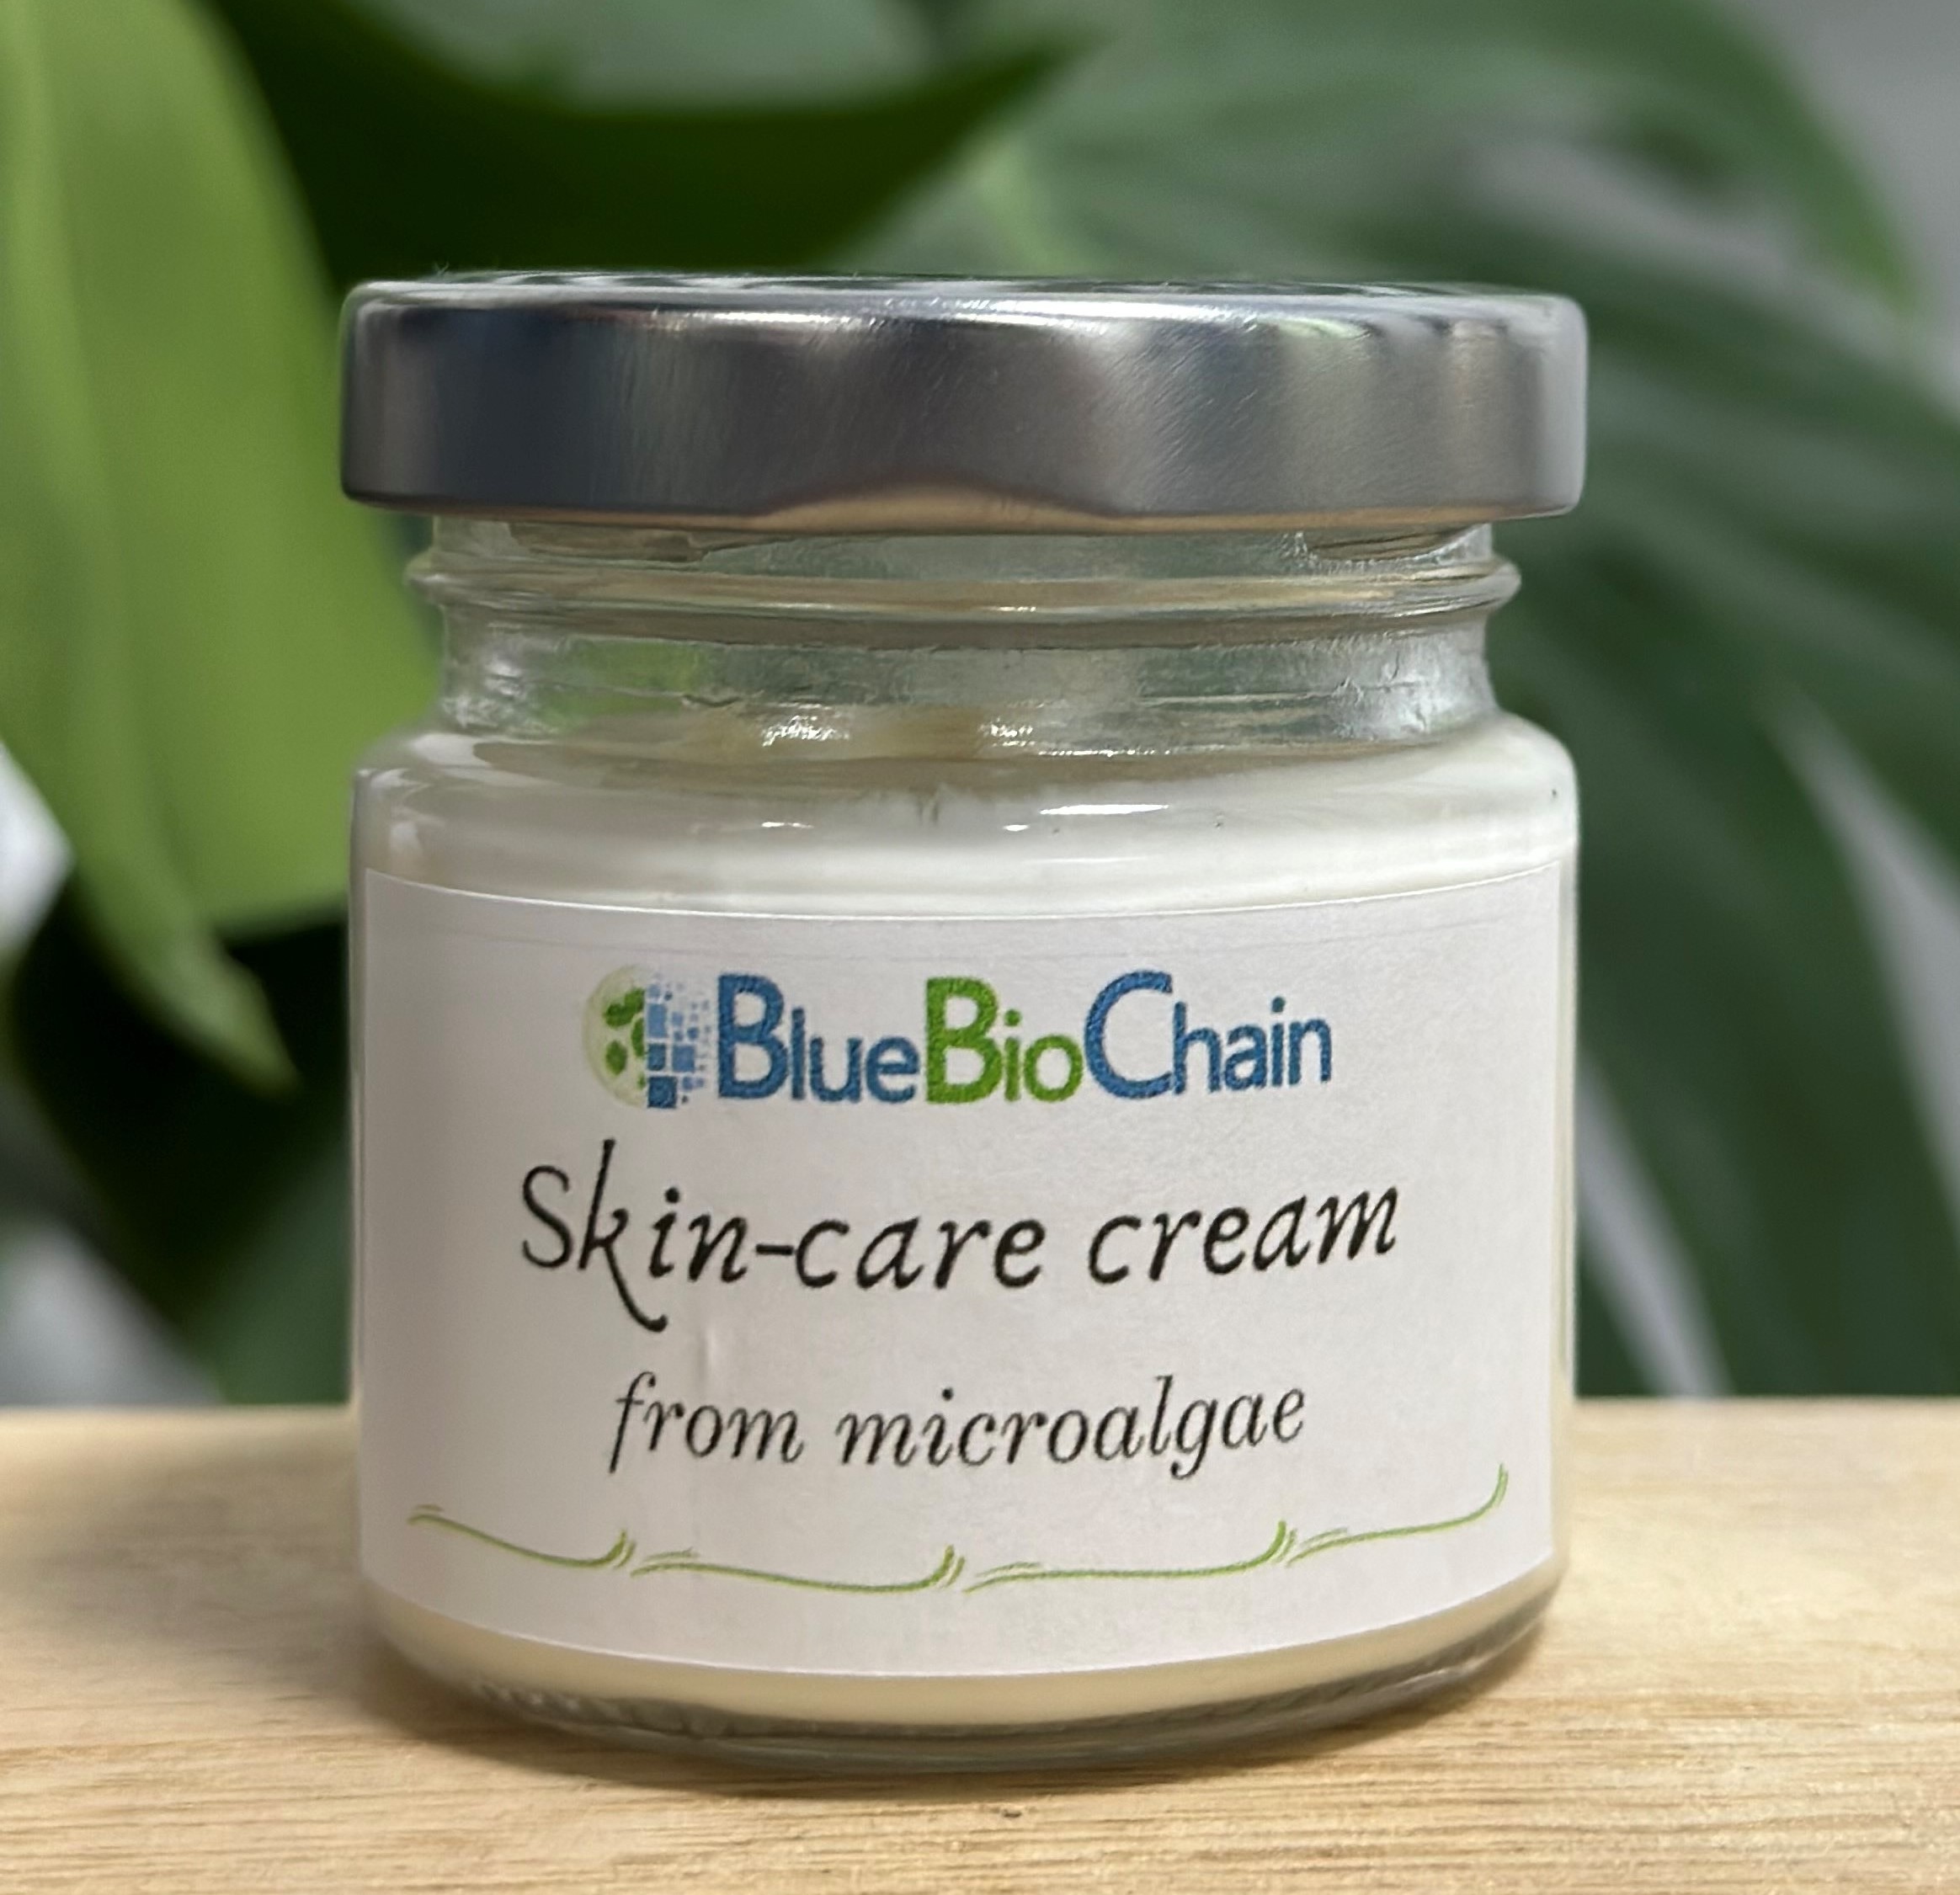 BlueBioChain Skin-care cream from microalgae